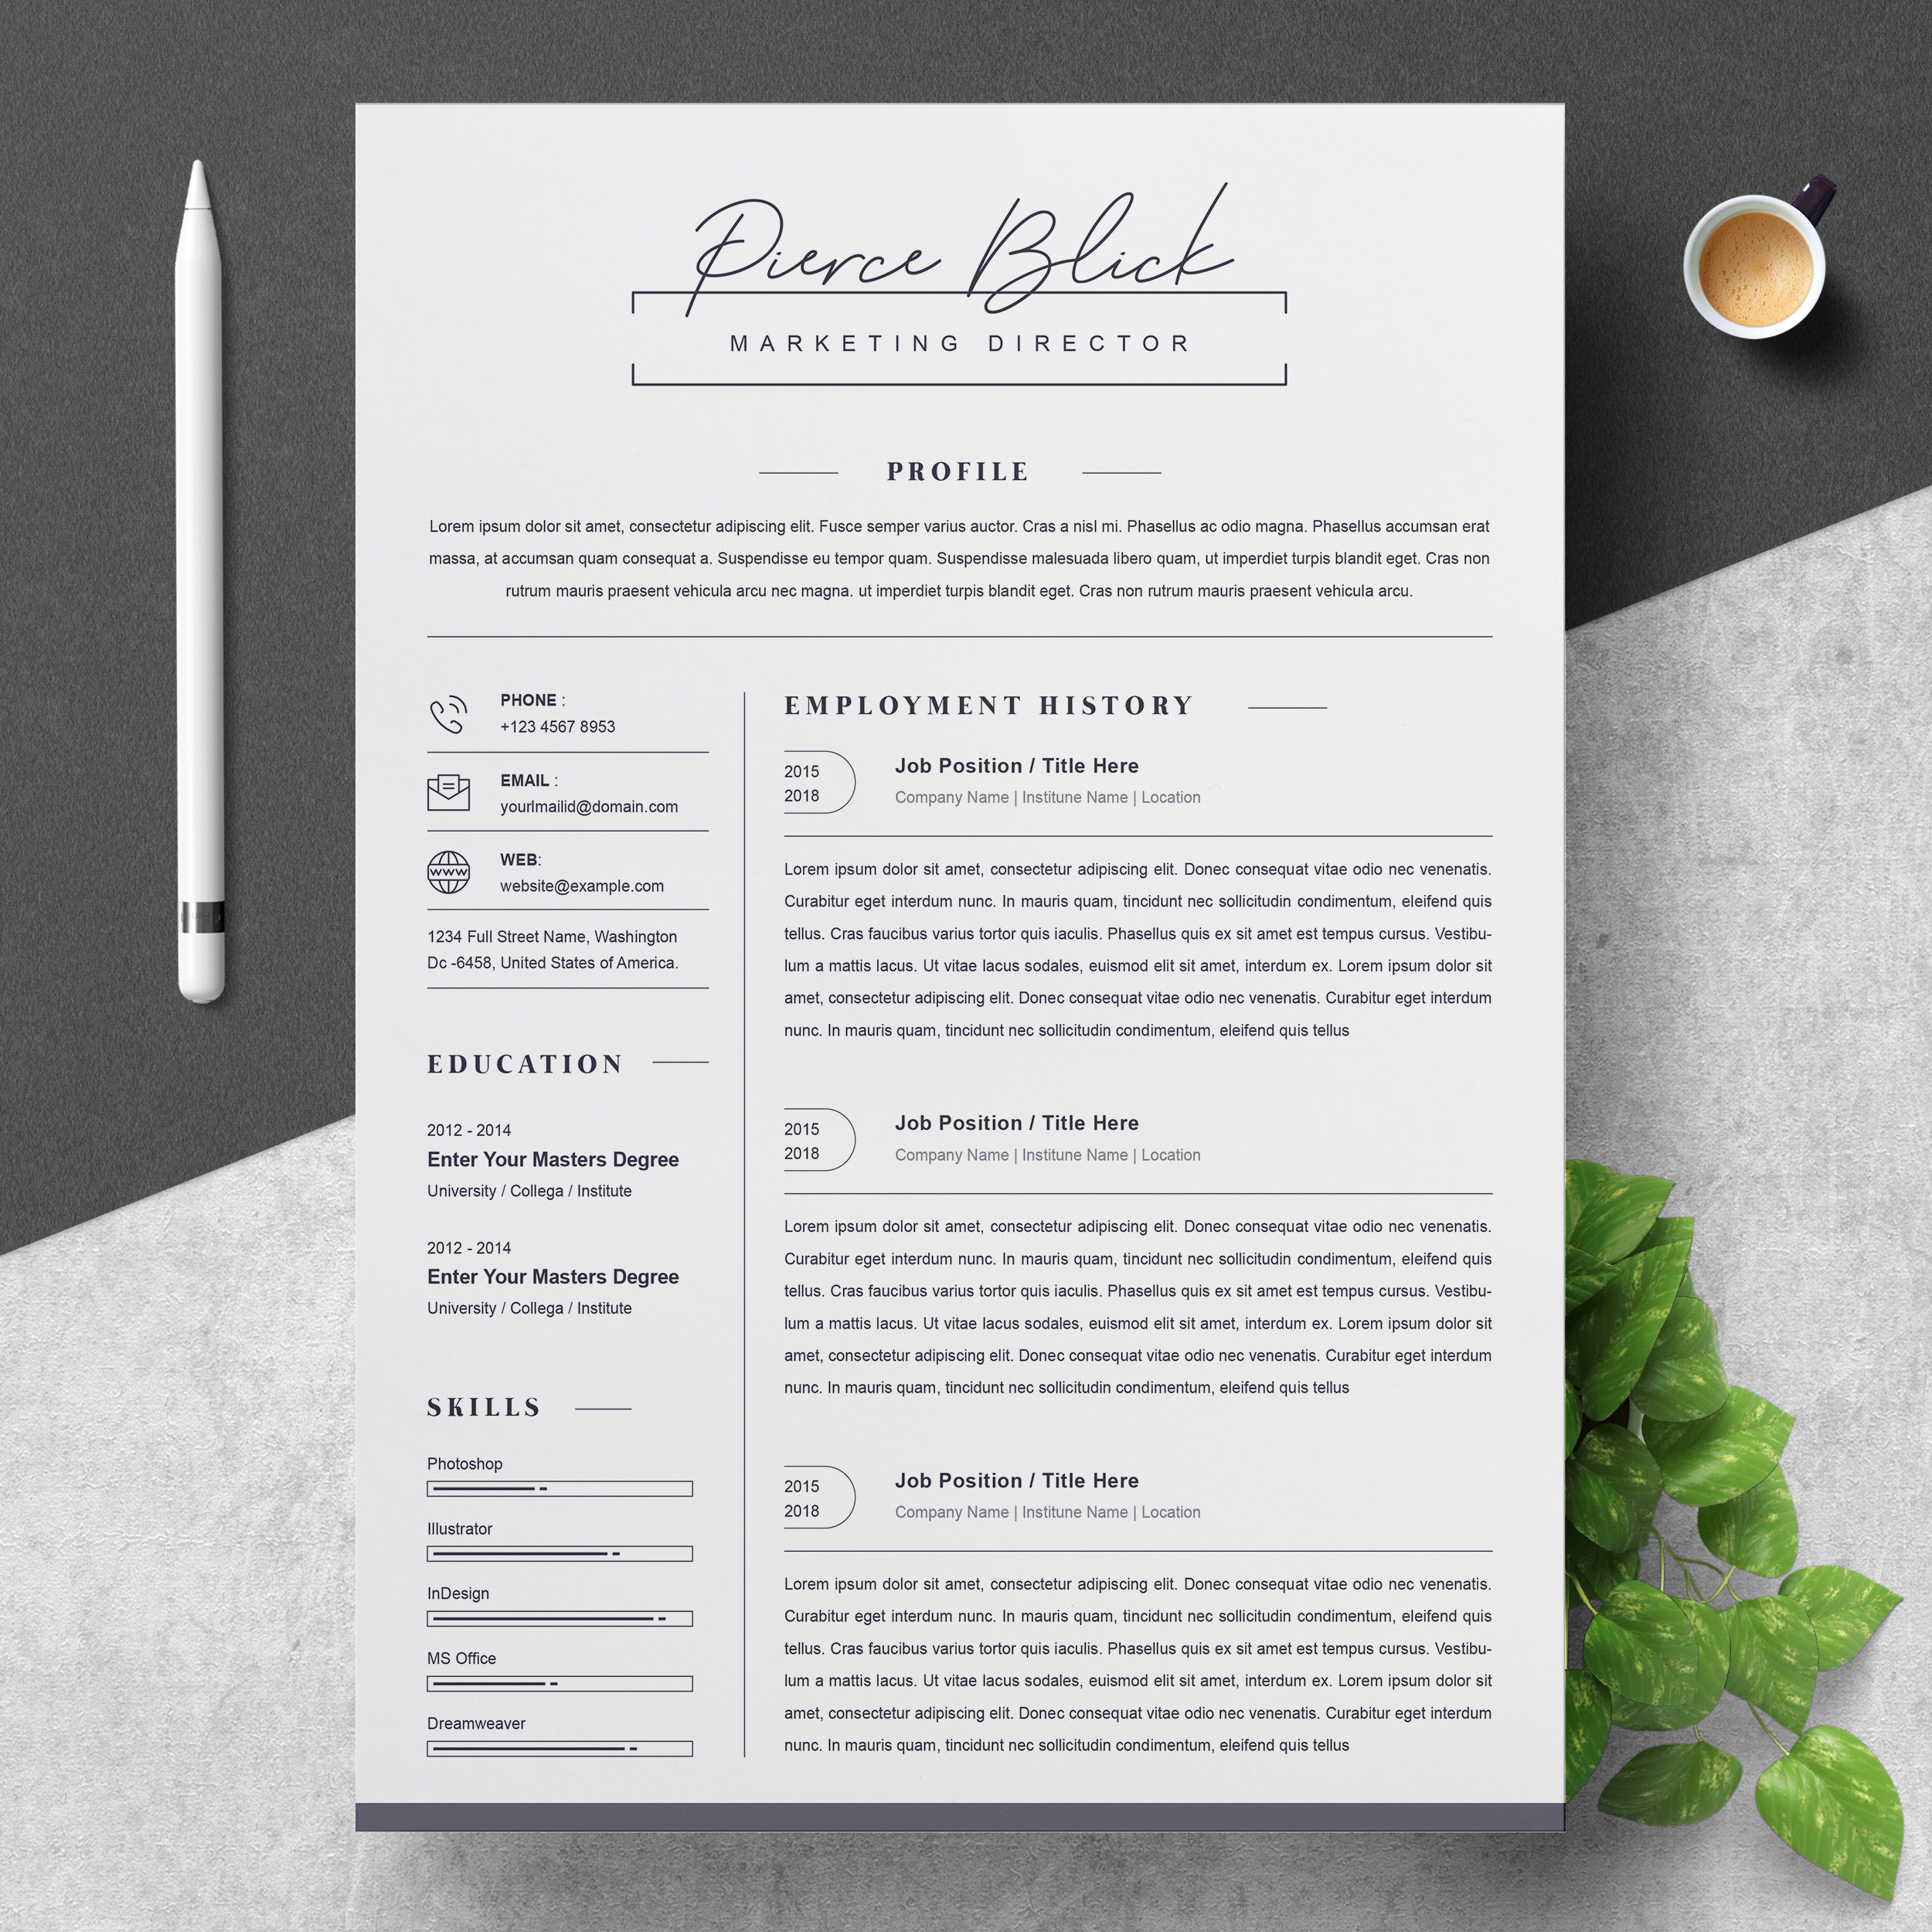 free modern professional resume templates